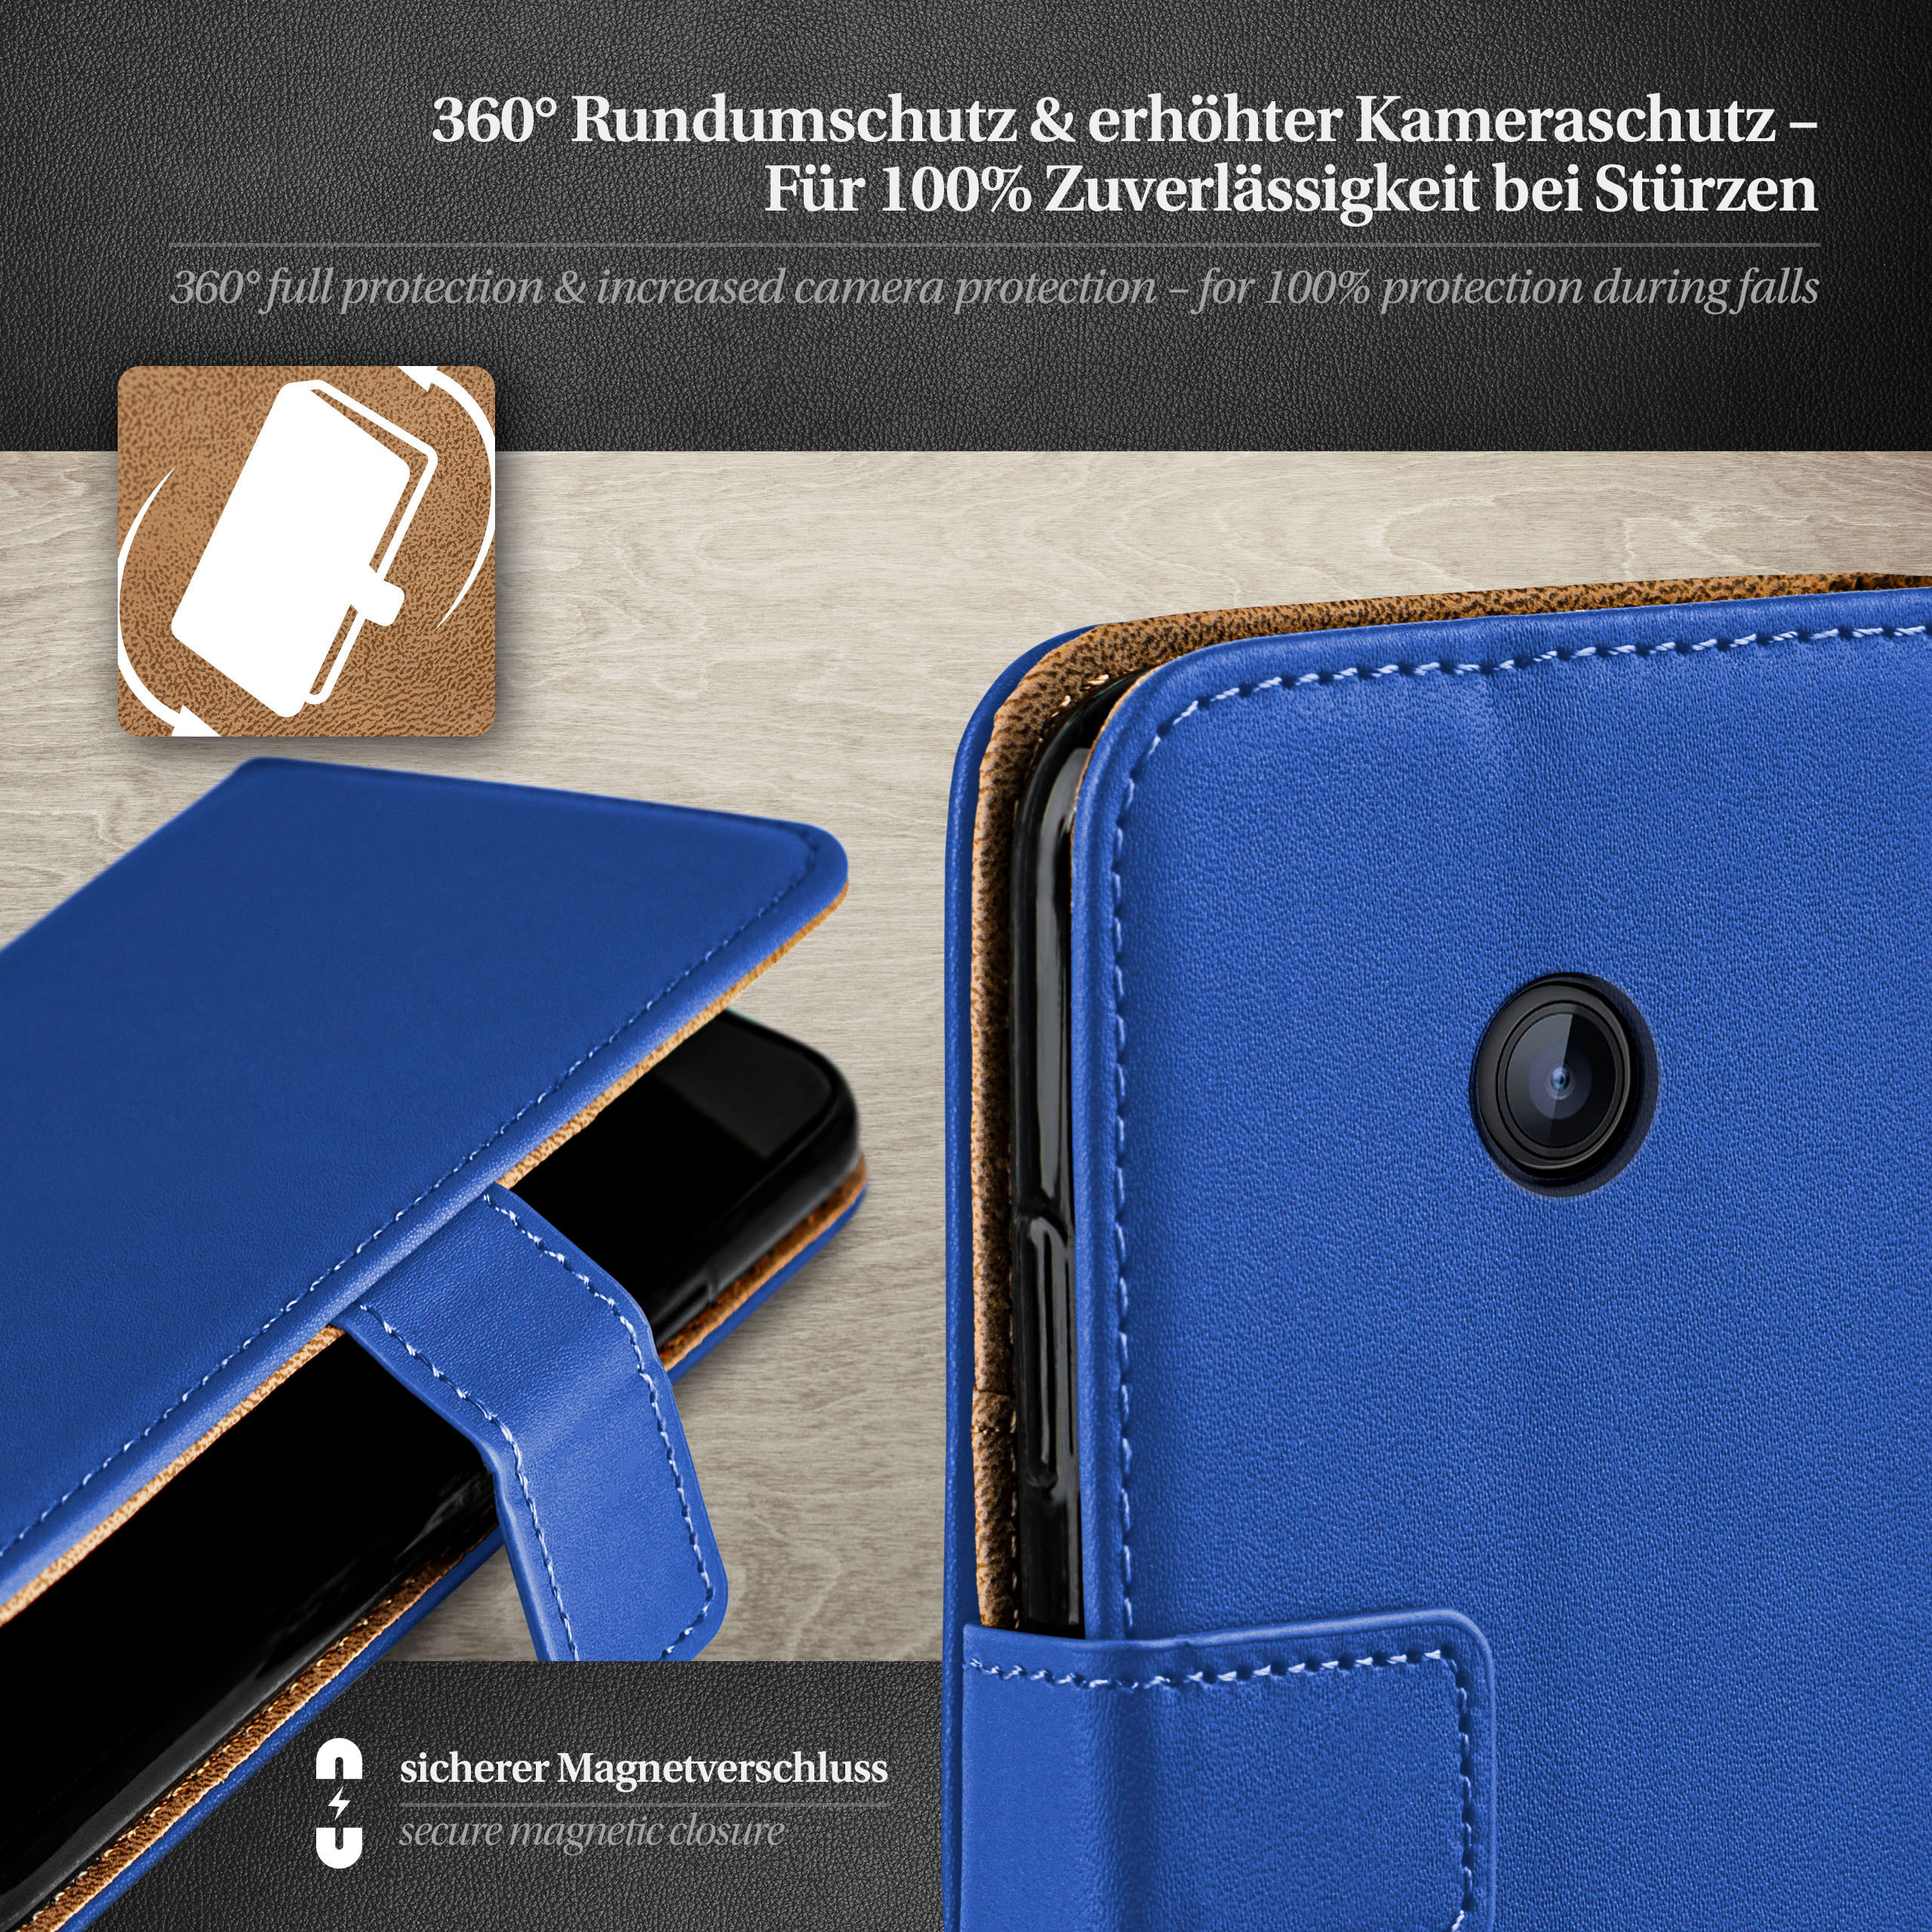 Lumia 630 Case, / MOEX Book 635, Royal-Blue Nokia, Bookcover,